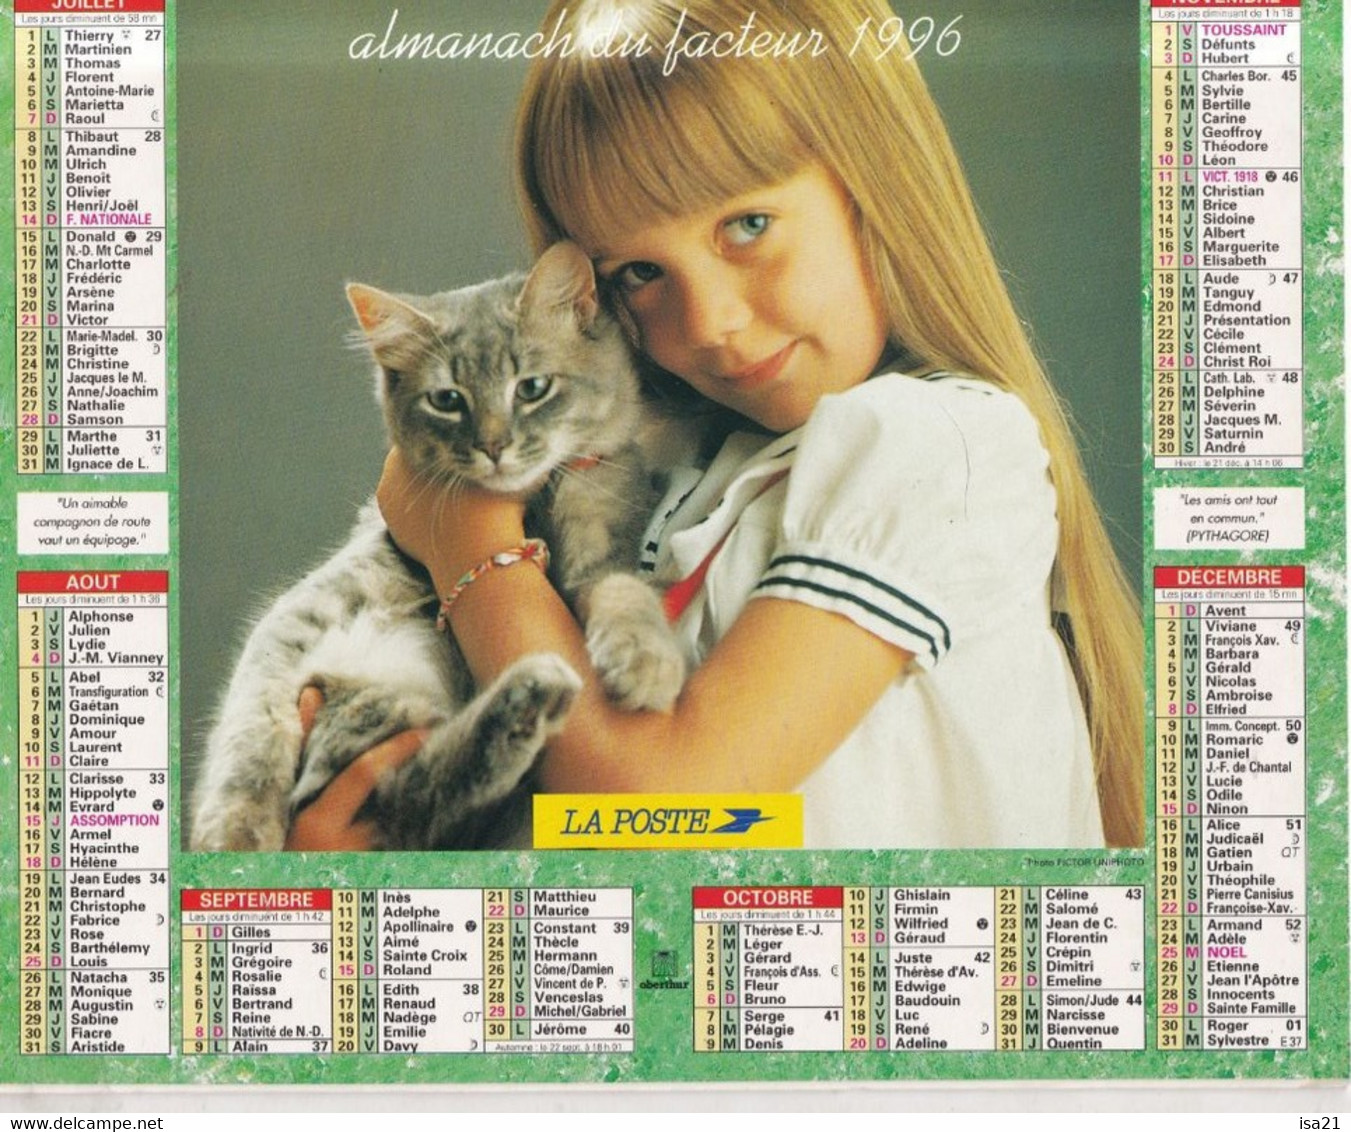 Big : 1991-00 - Calendrier de la Poste, Almanach du Facteur: 1991